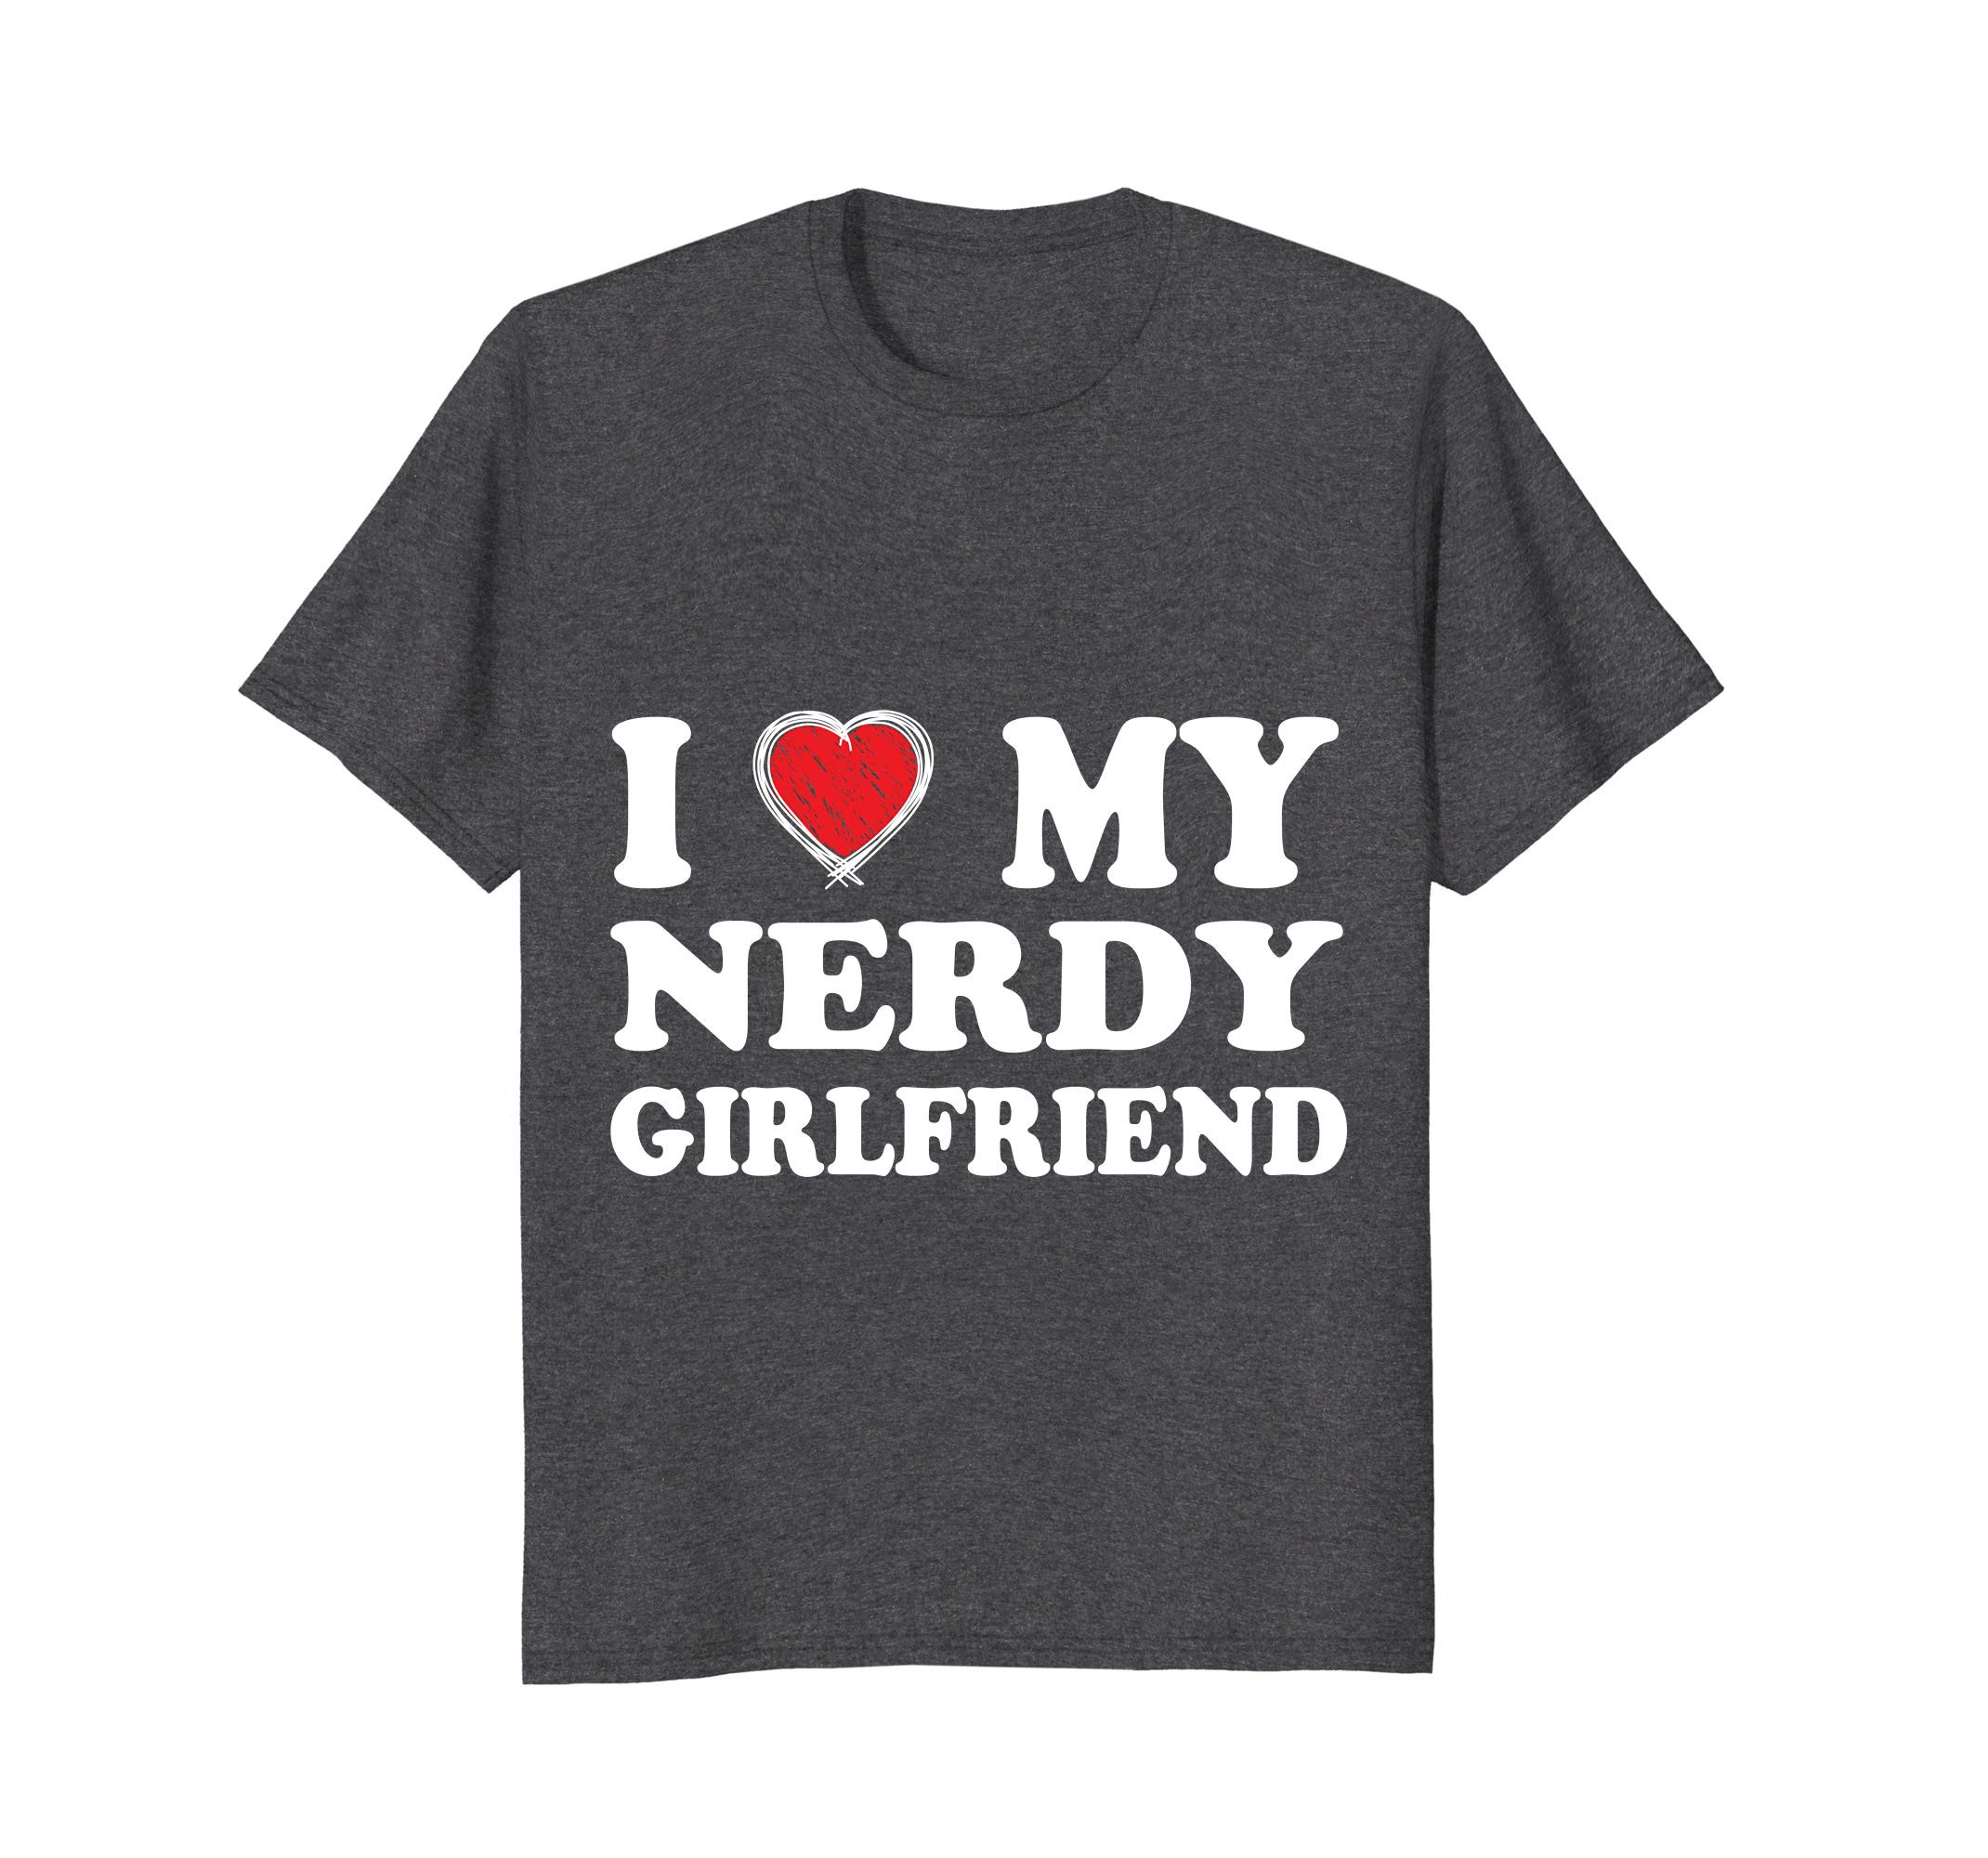 Gift Ideas For Nerdy Girlfriend
 I Heart My Nerdy Girlfriend Valentine’s Day Gift Shirt AZP